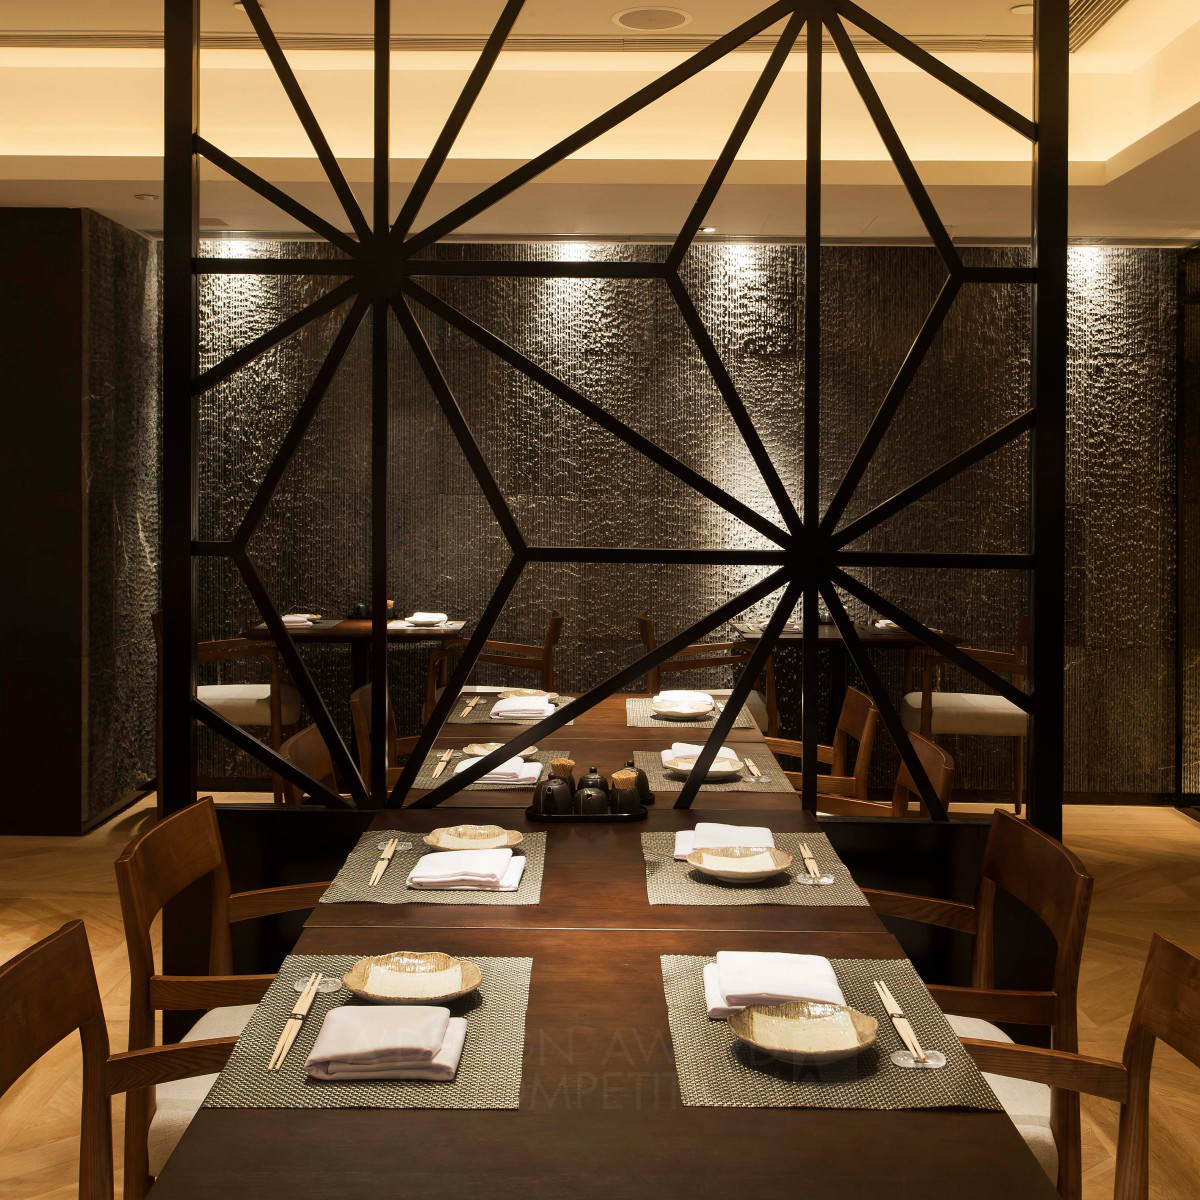 Masu Japanese Restaurant by J. Candice Interior Architects